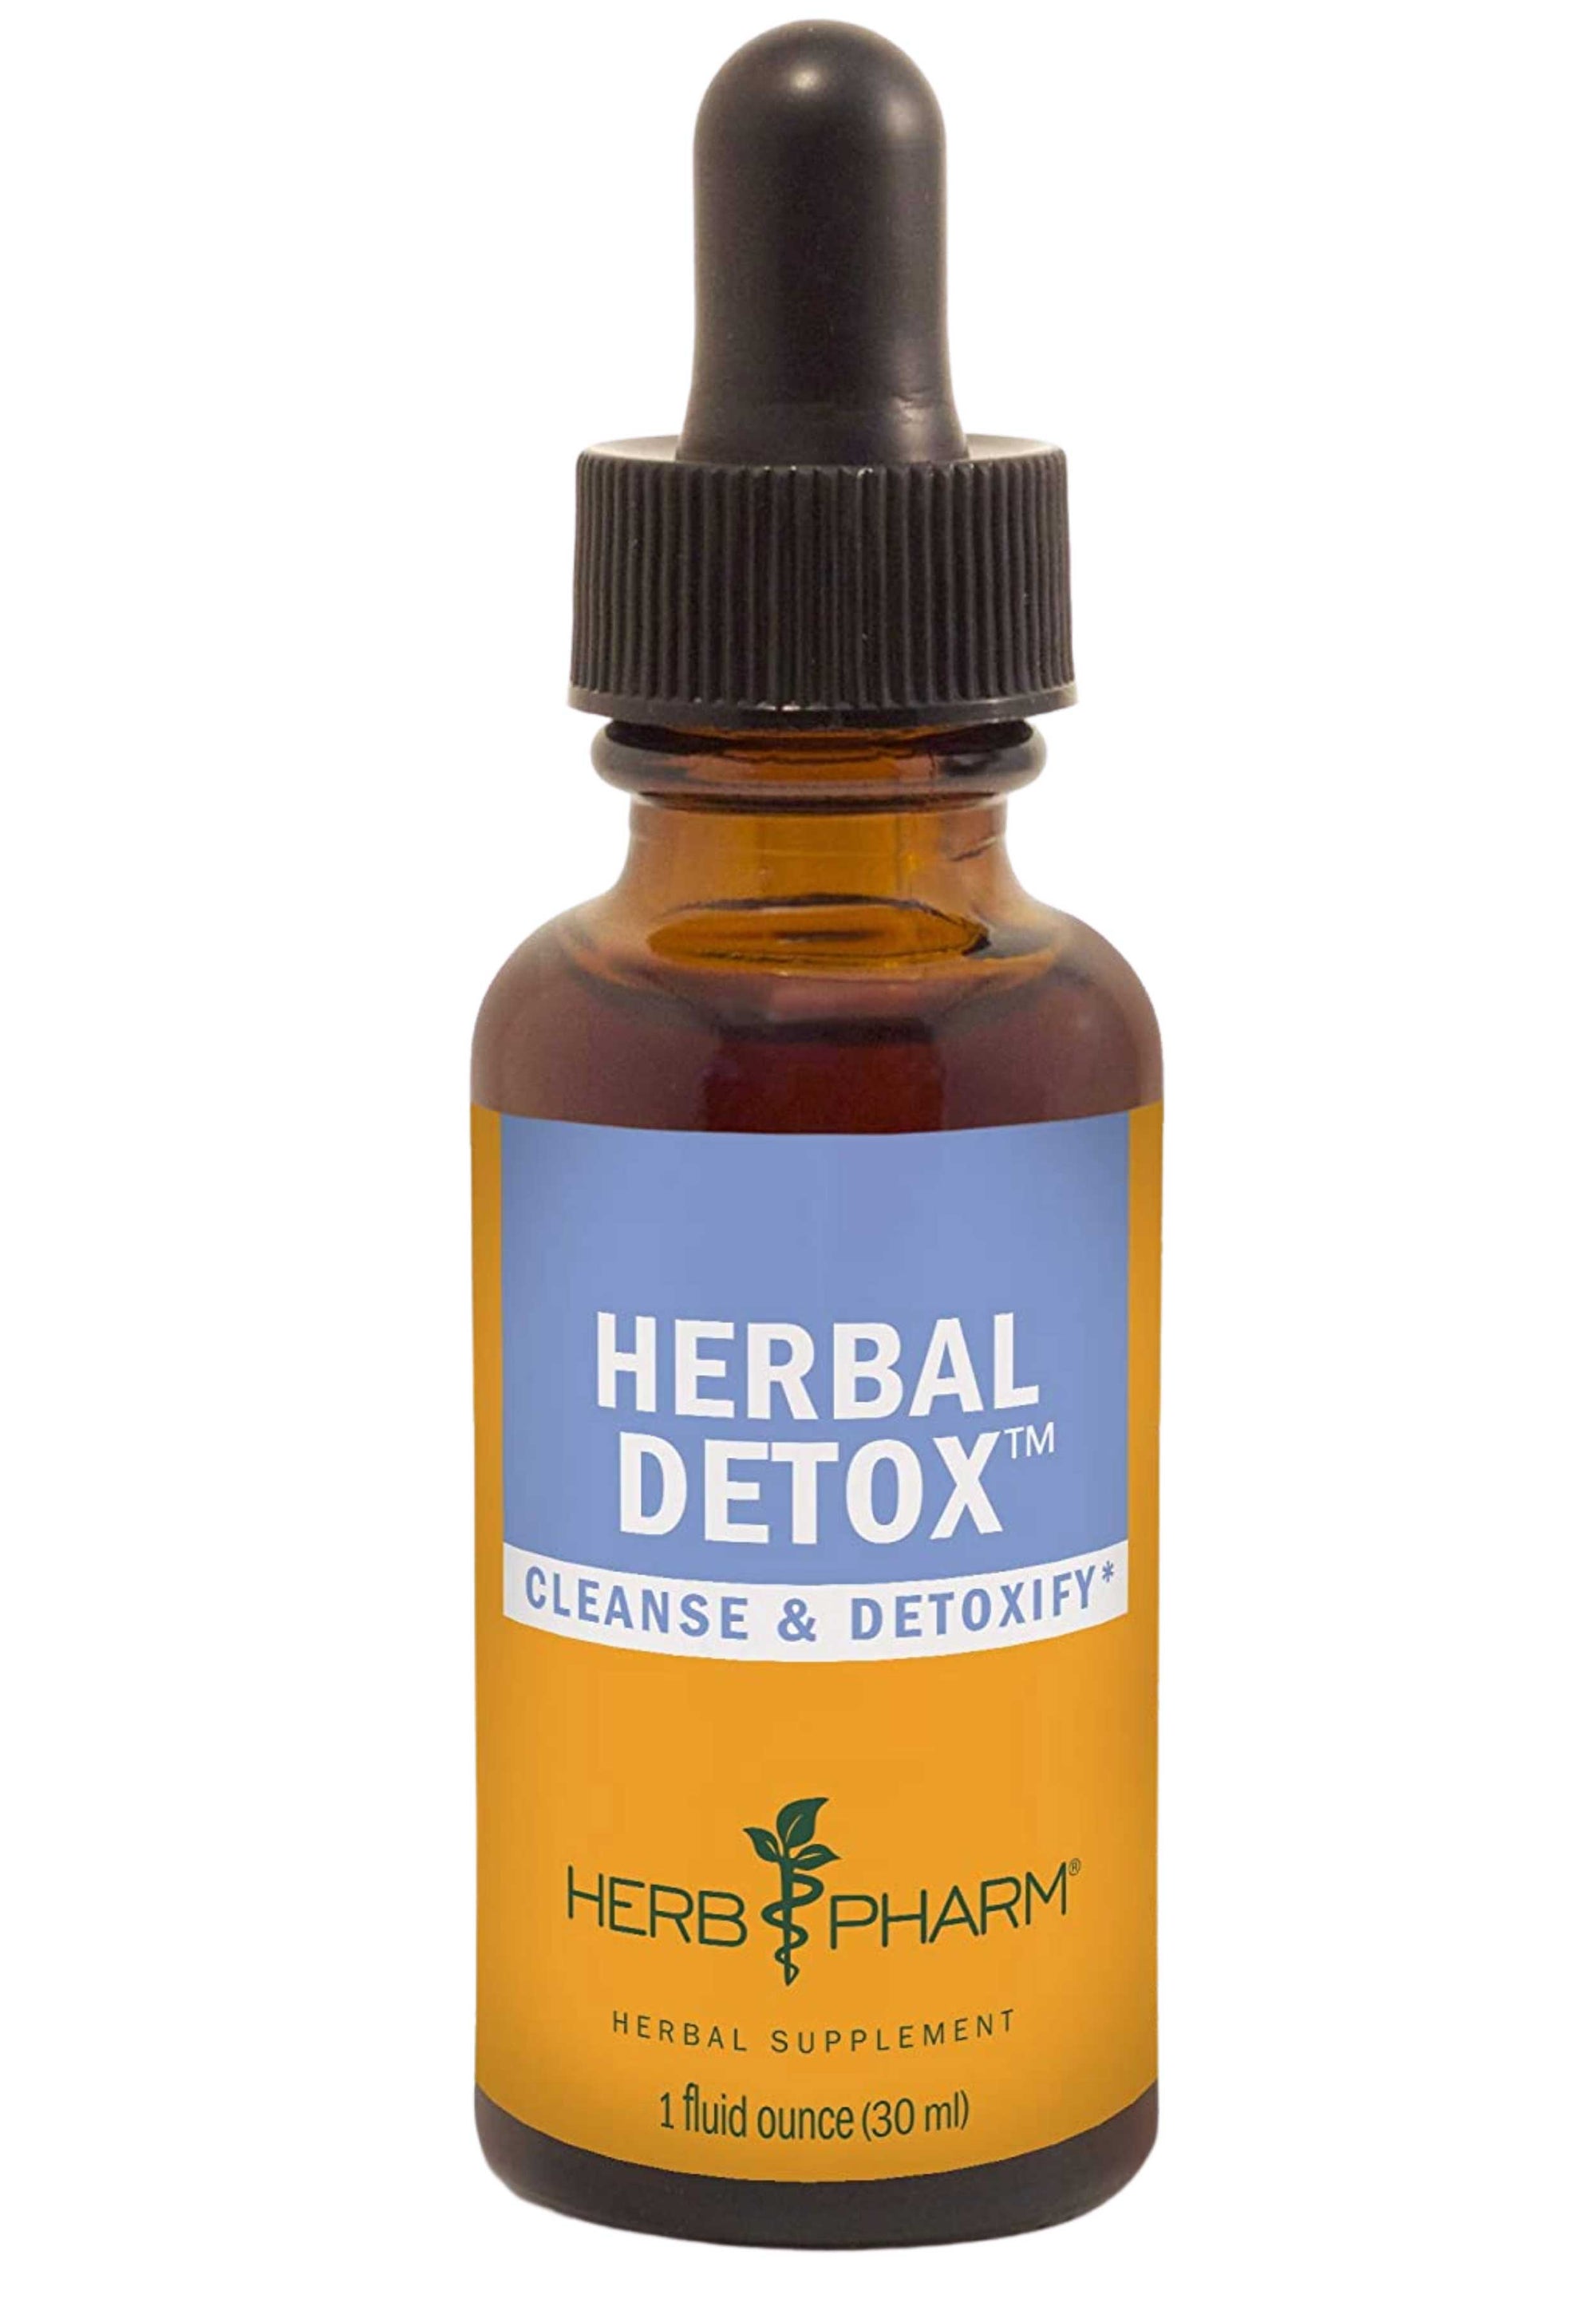 Herb Pharm Herbal Detox – Supplement First